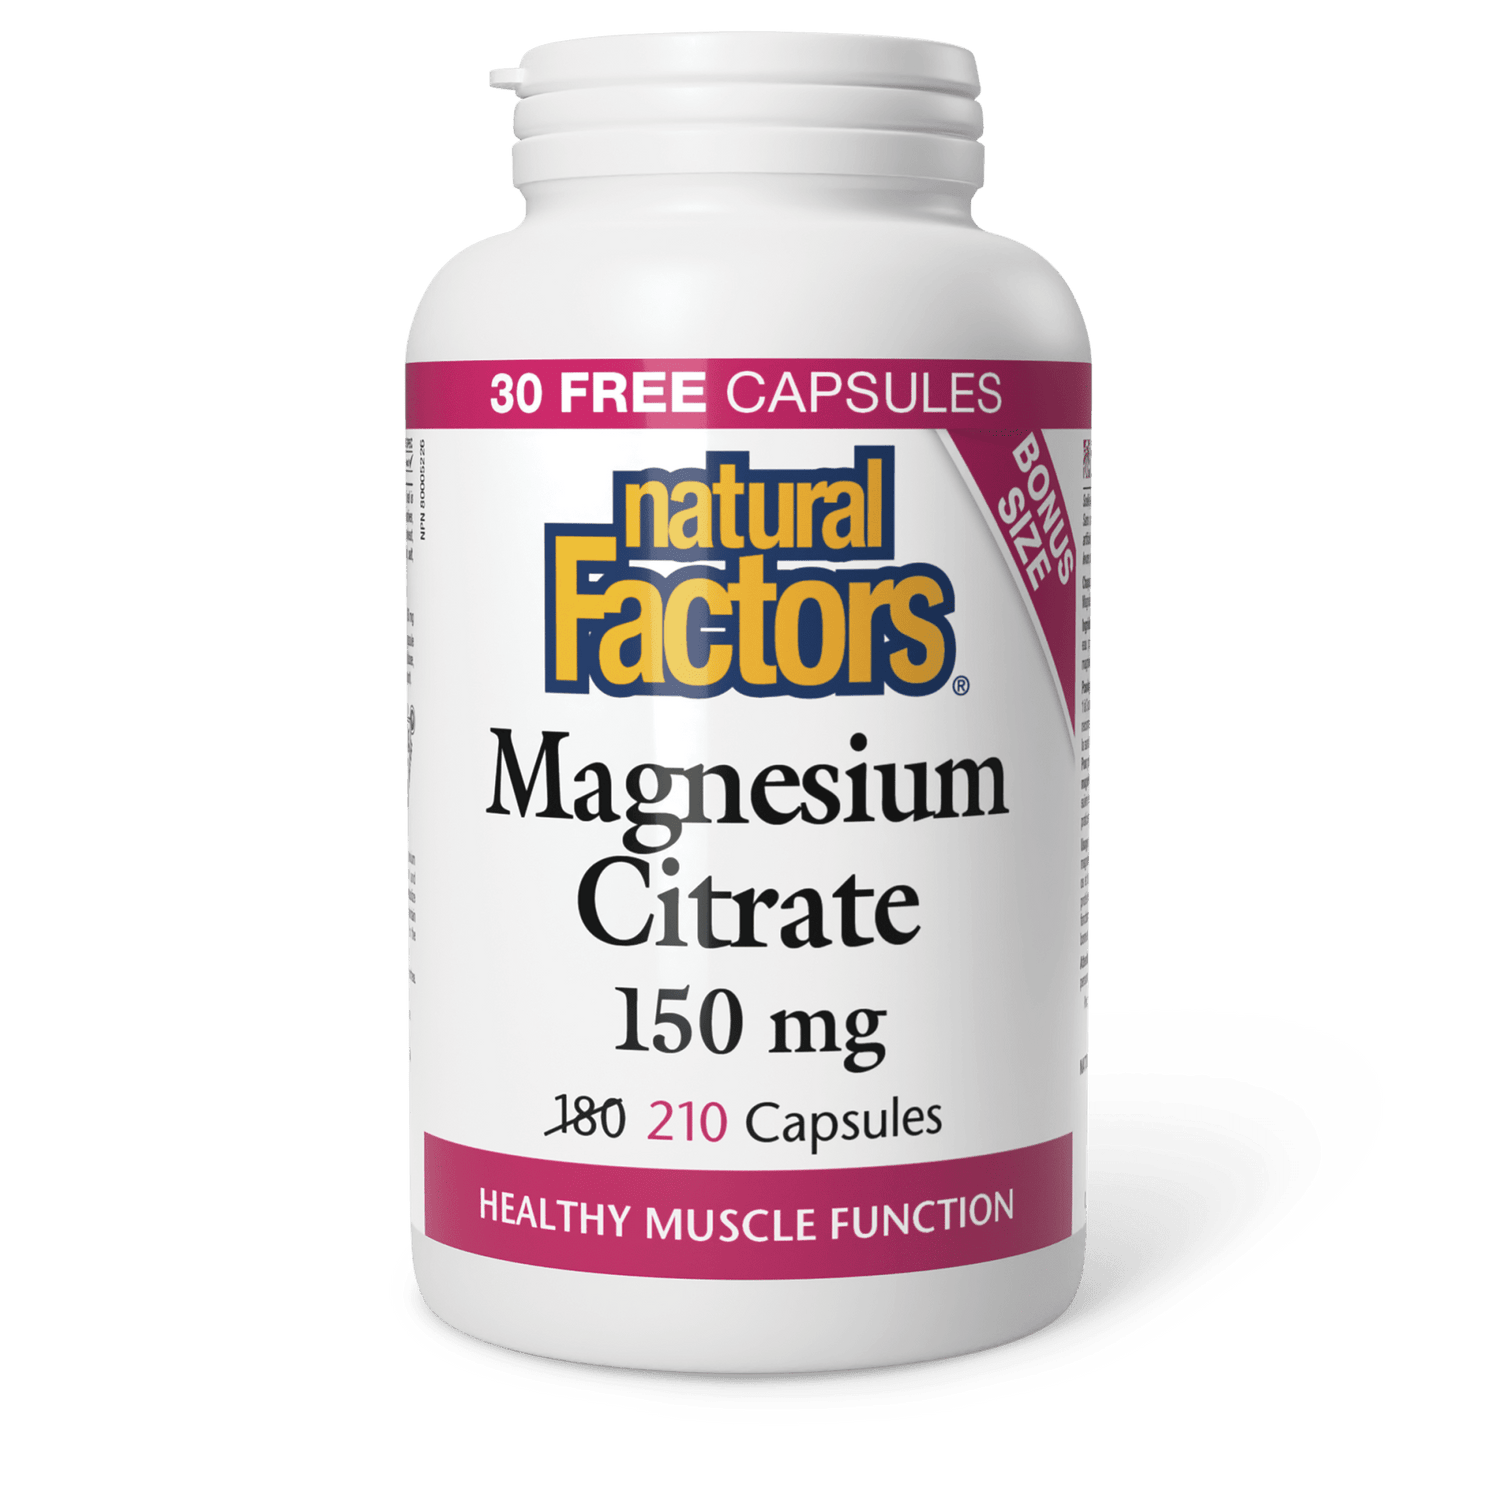 Magnesium Citrate 150 mg, Natural Factors|v|image|8161